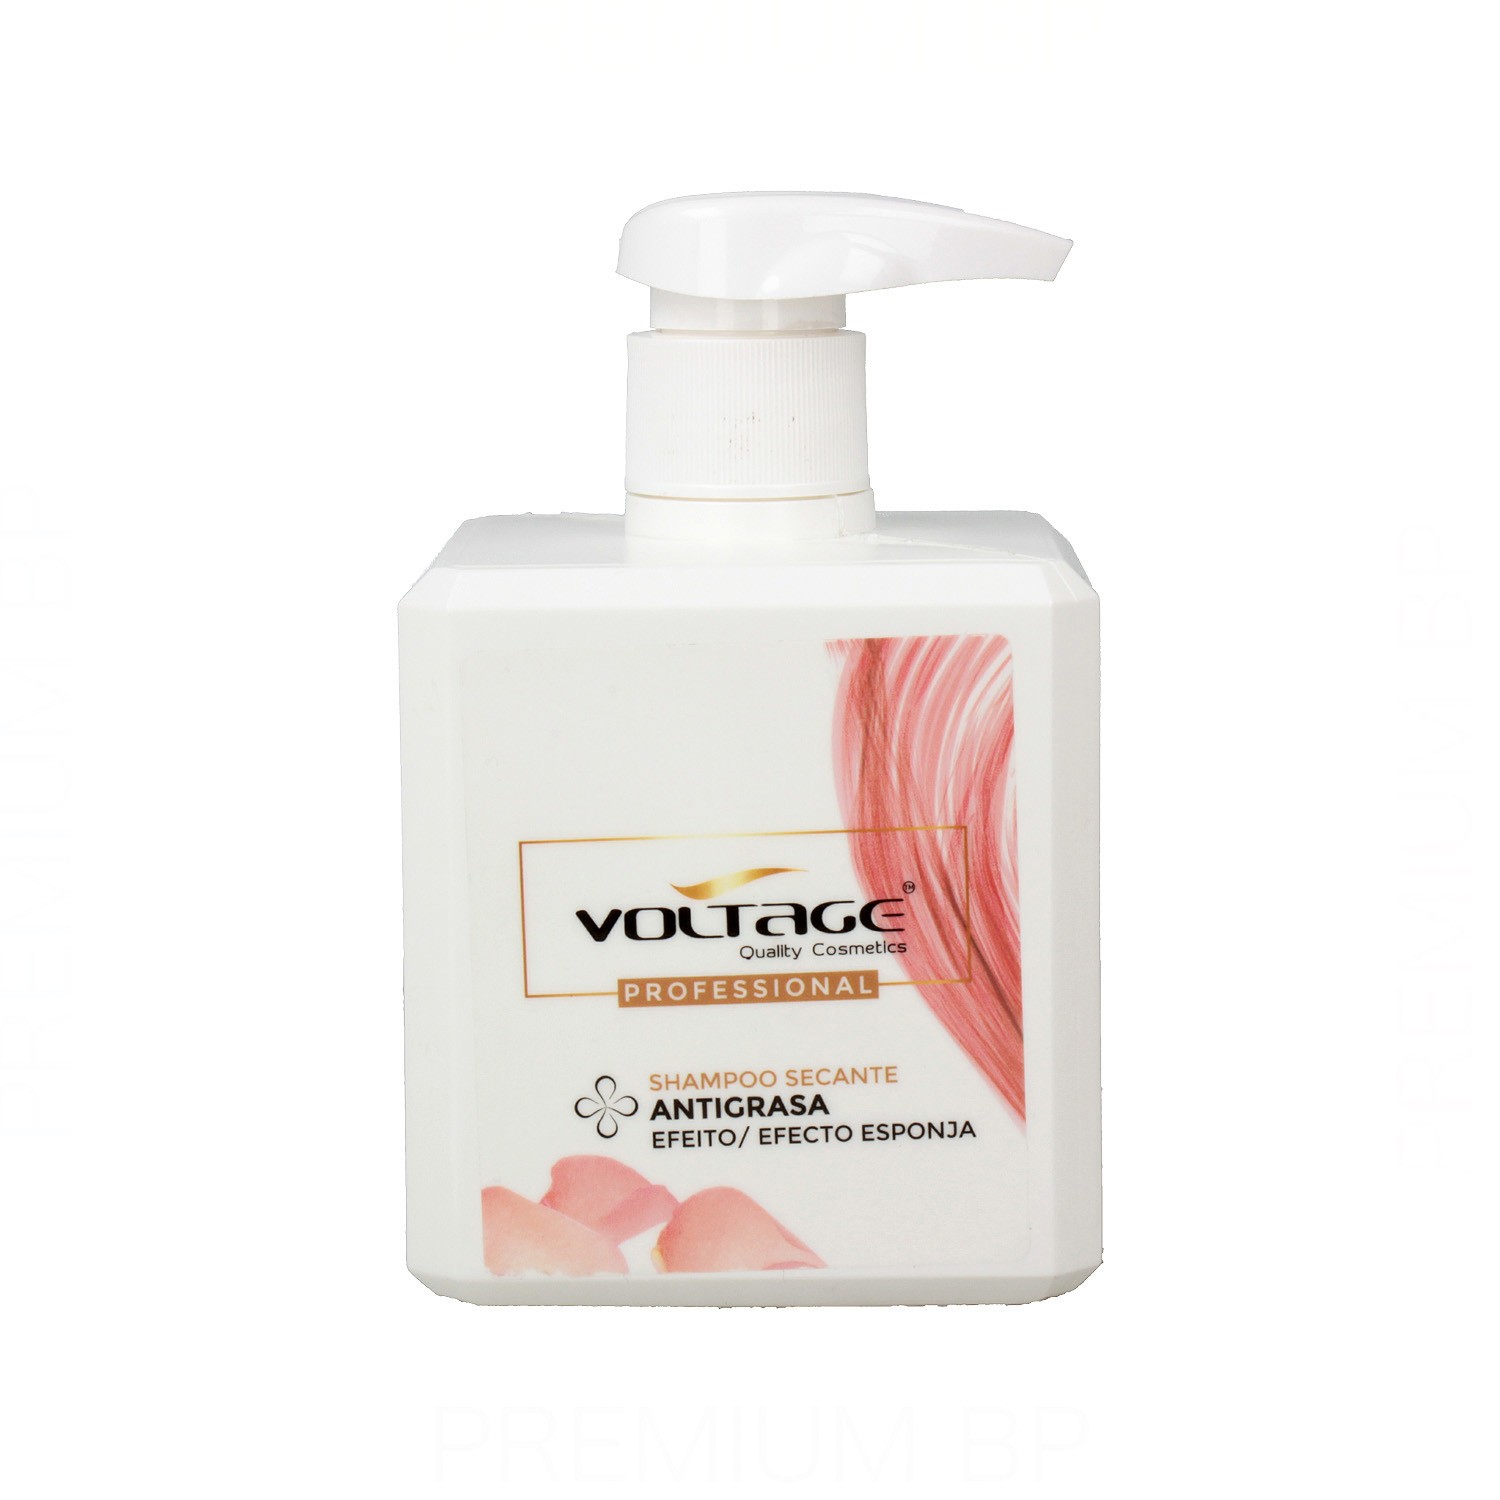 Voltage Professional Secante Shampoo 450 ml